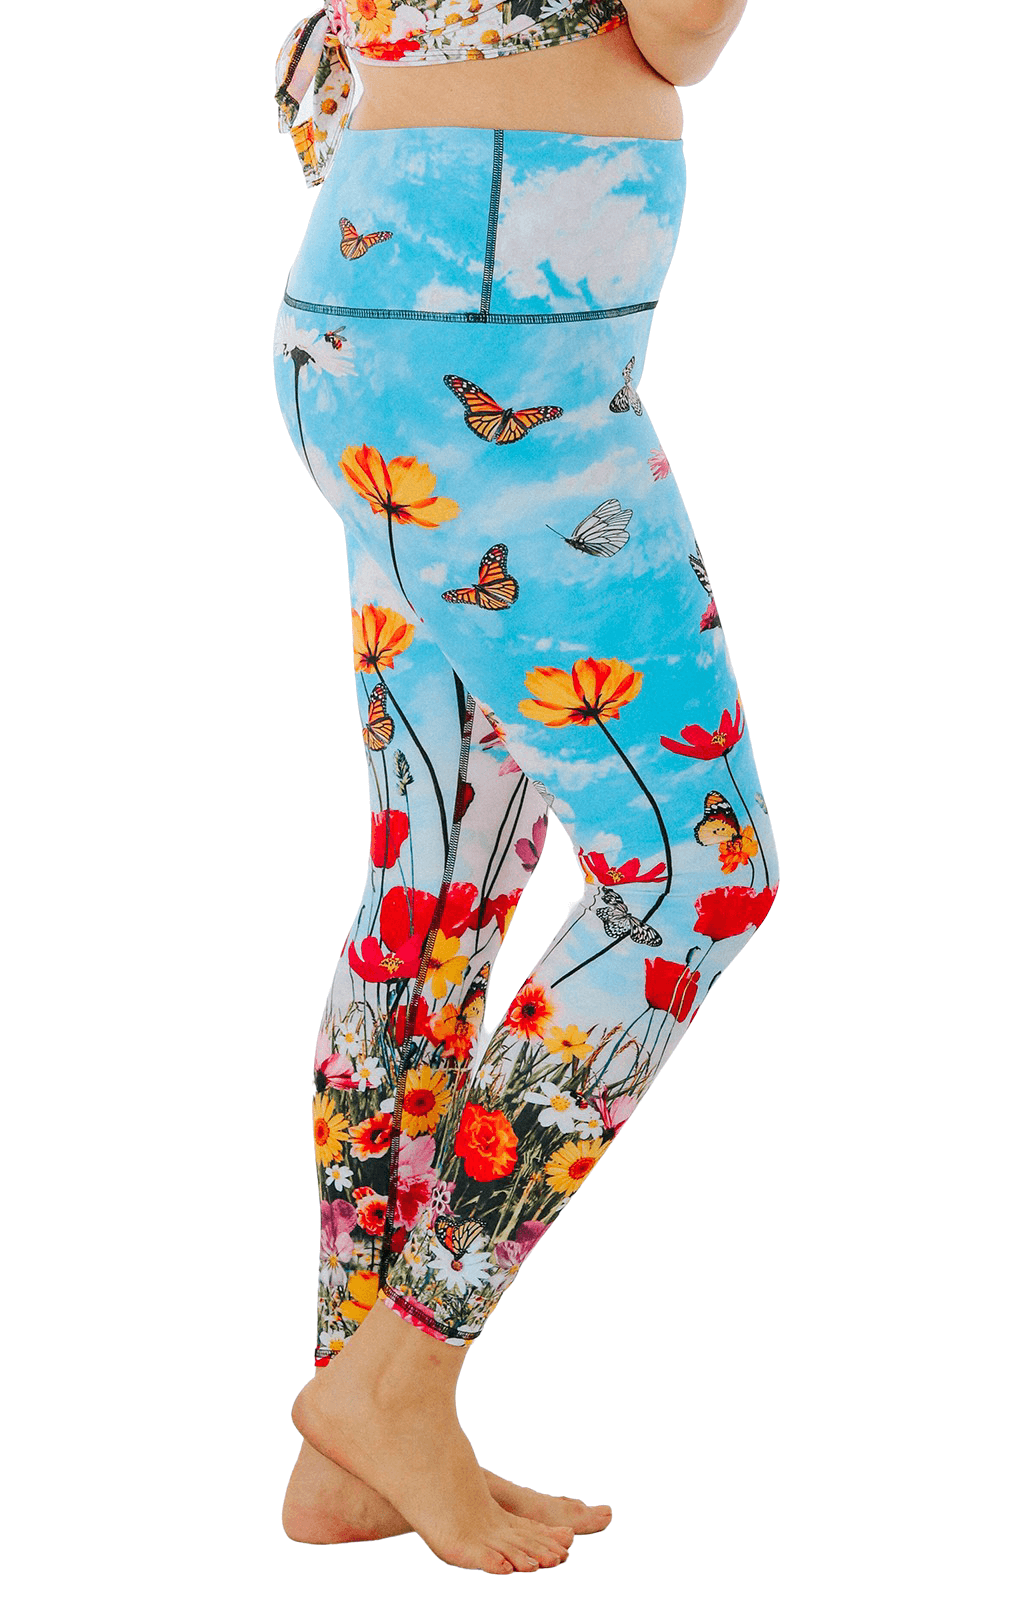 Flower Child Eco-Friendly Women's Printed Yoga Leggings